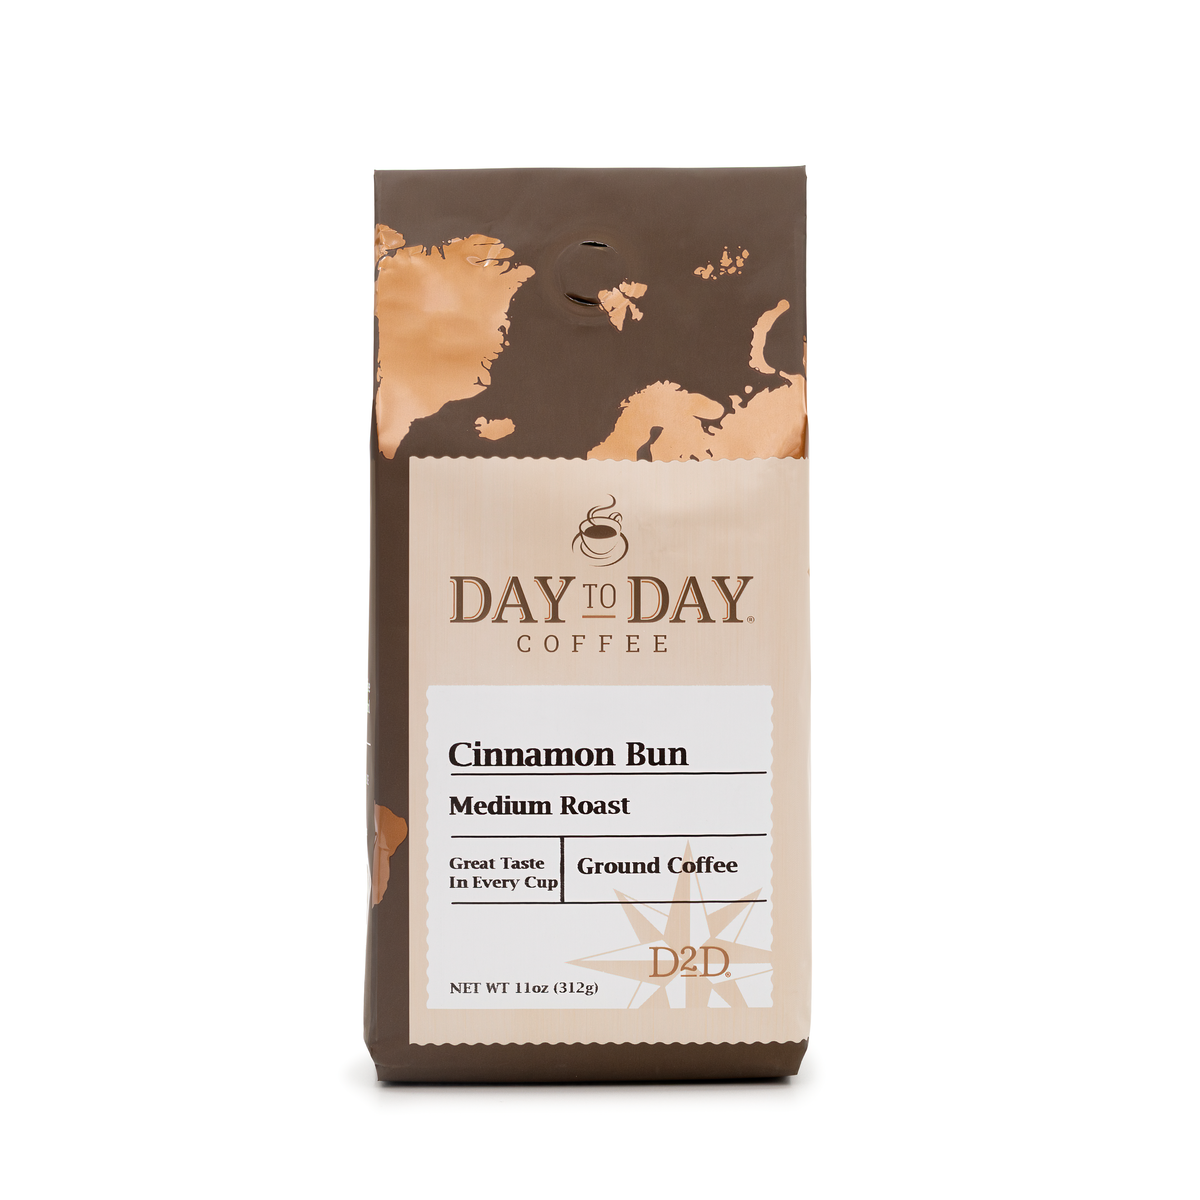 Day to day coffee 11oz cinnamon bun medium roast ground coffee - 1